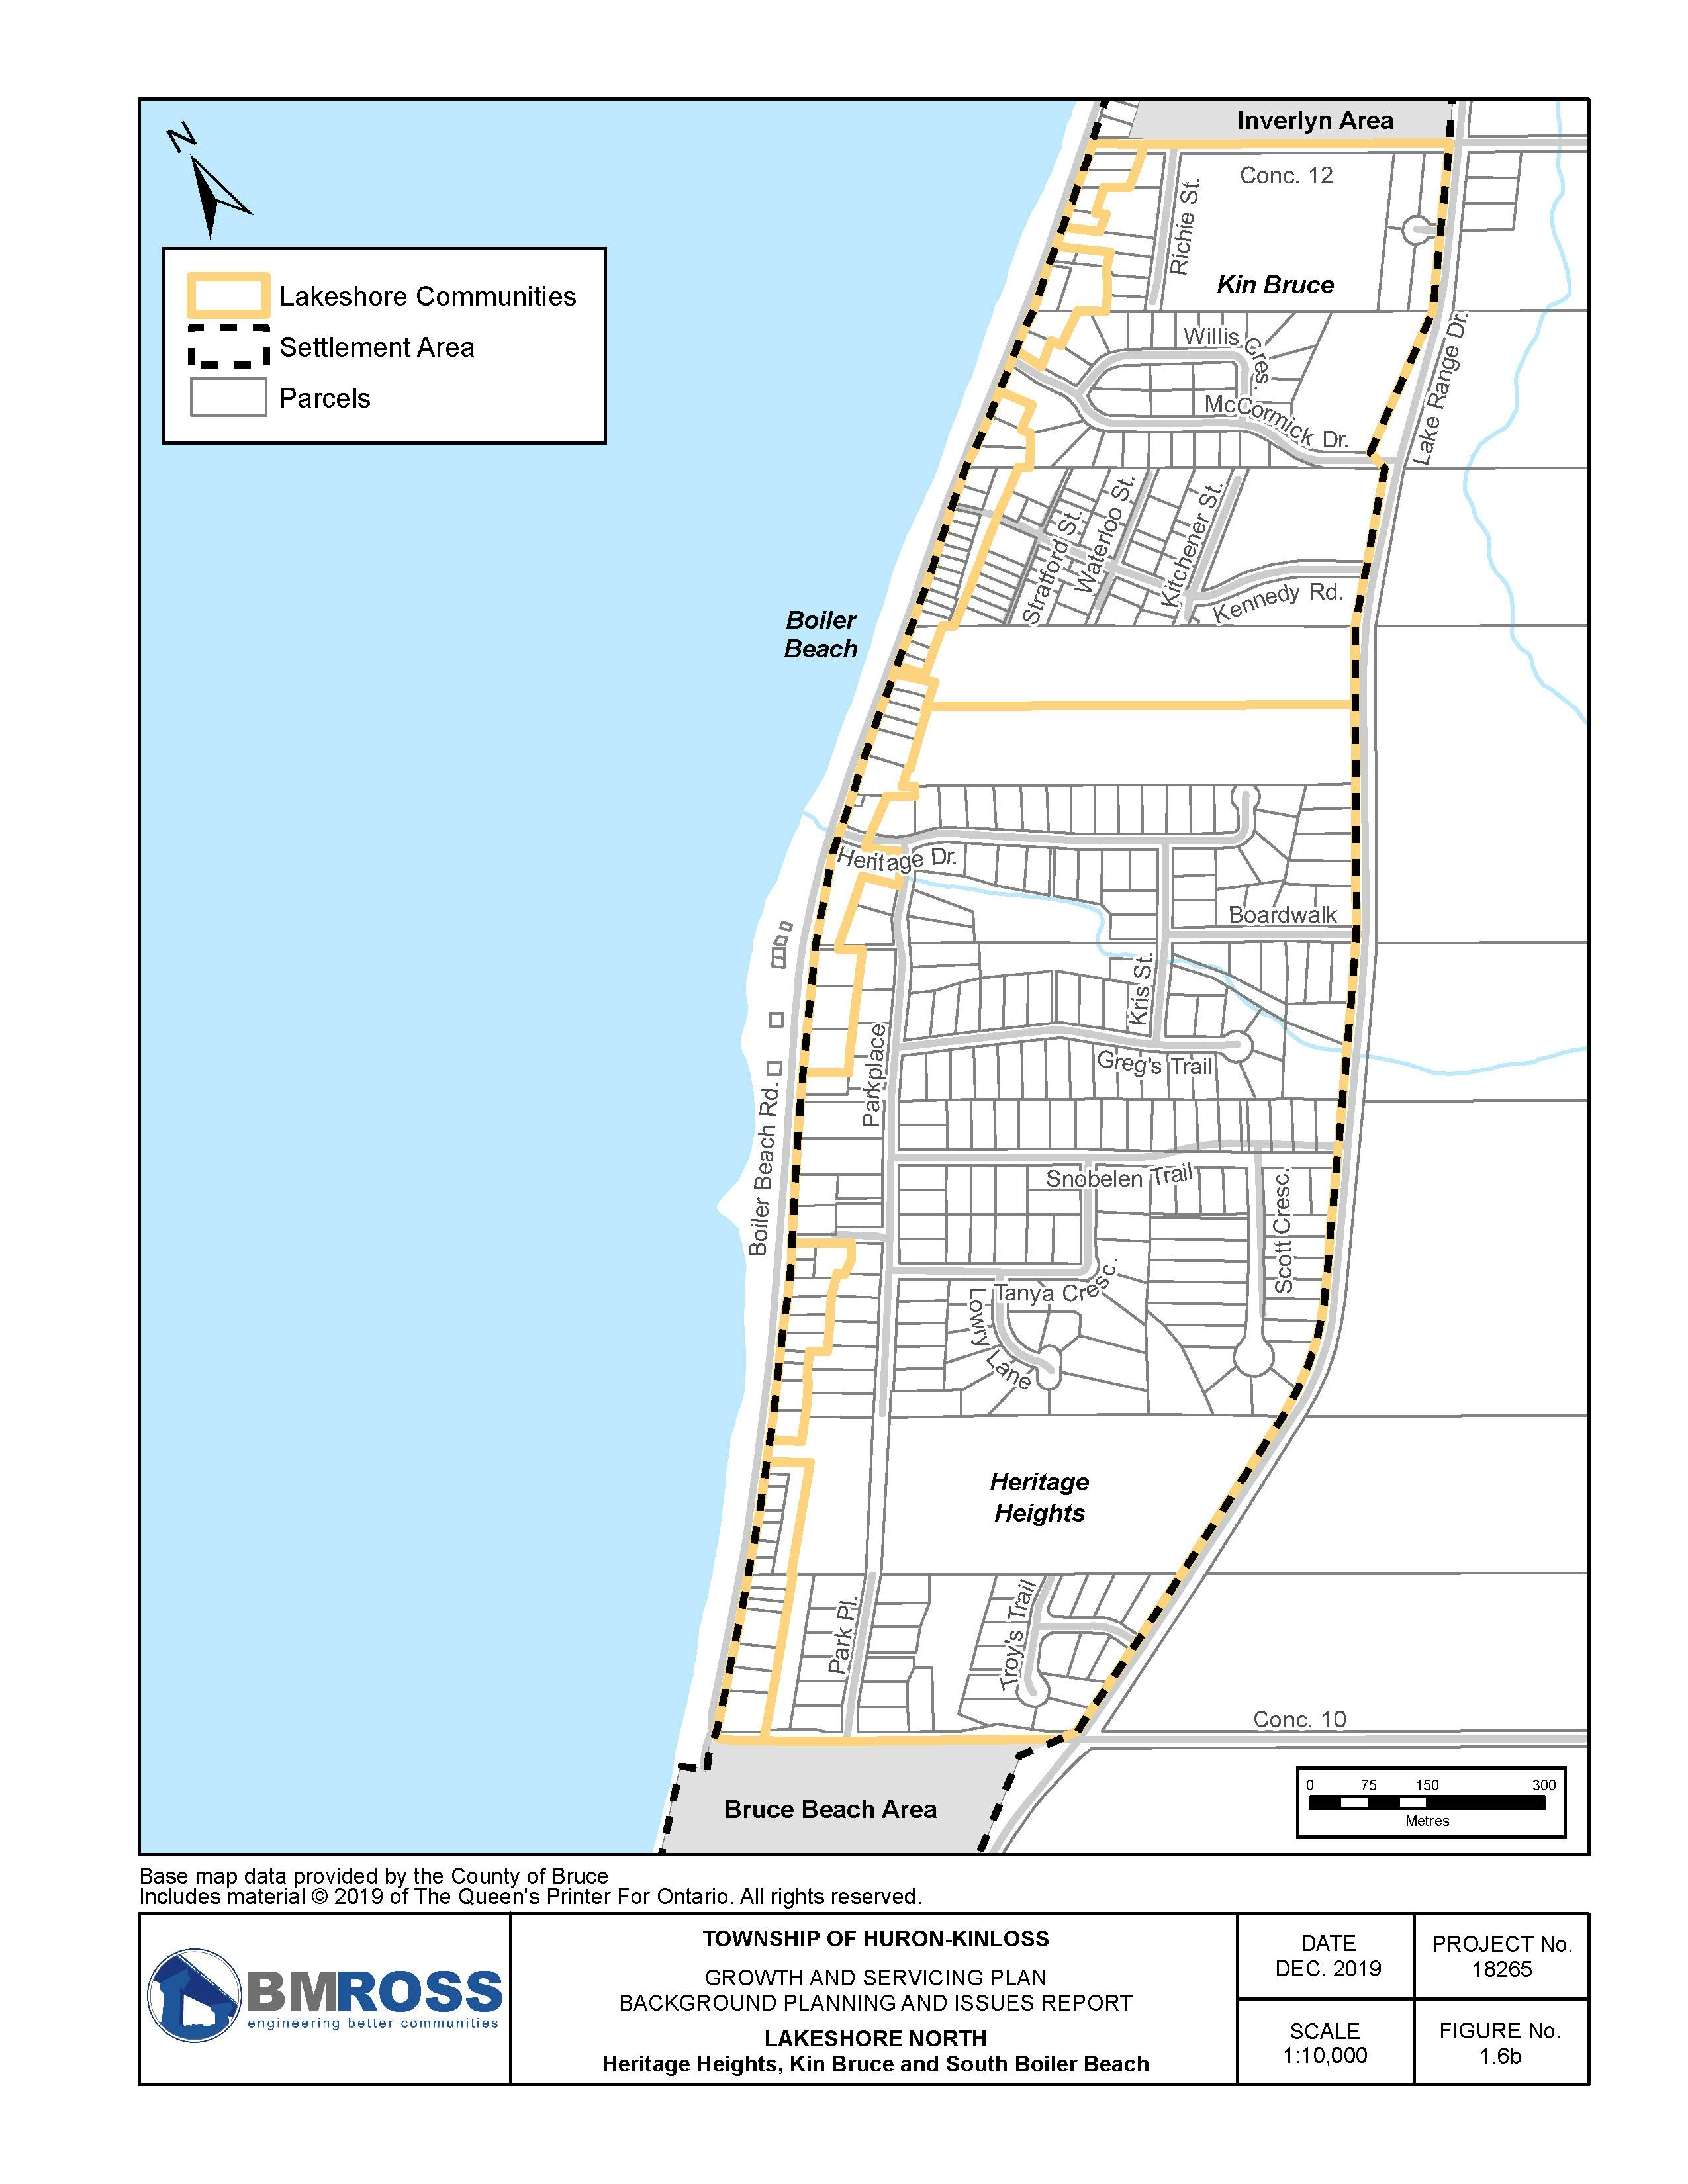 Fig1.6b-Lakeshore North Communities-Heritage Heights.jpg